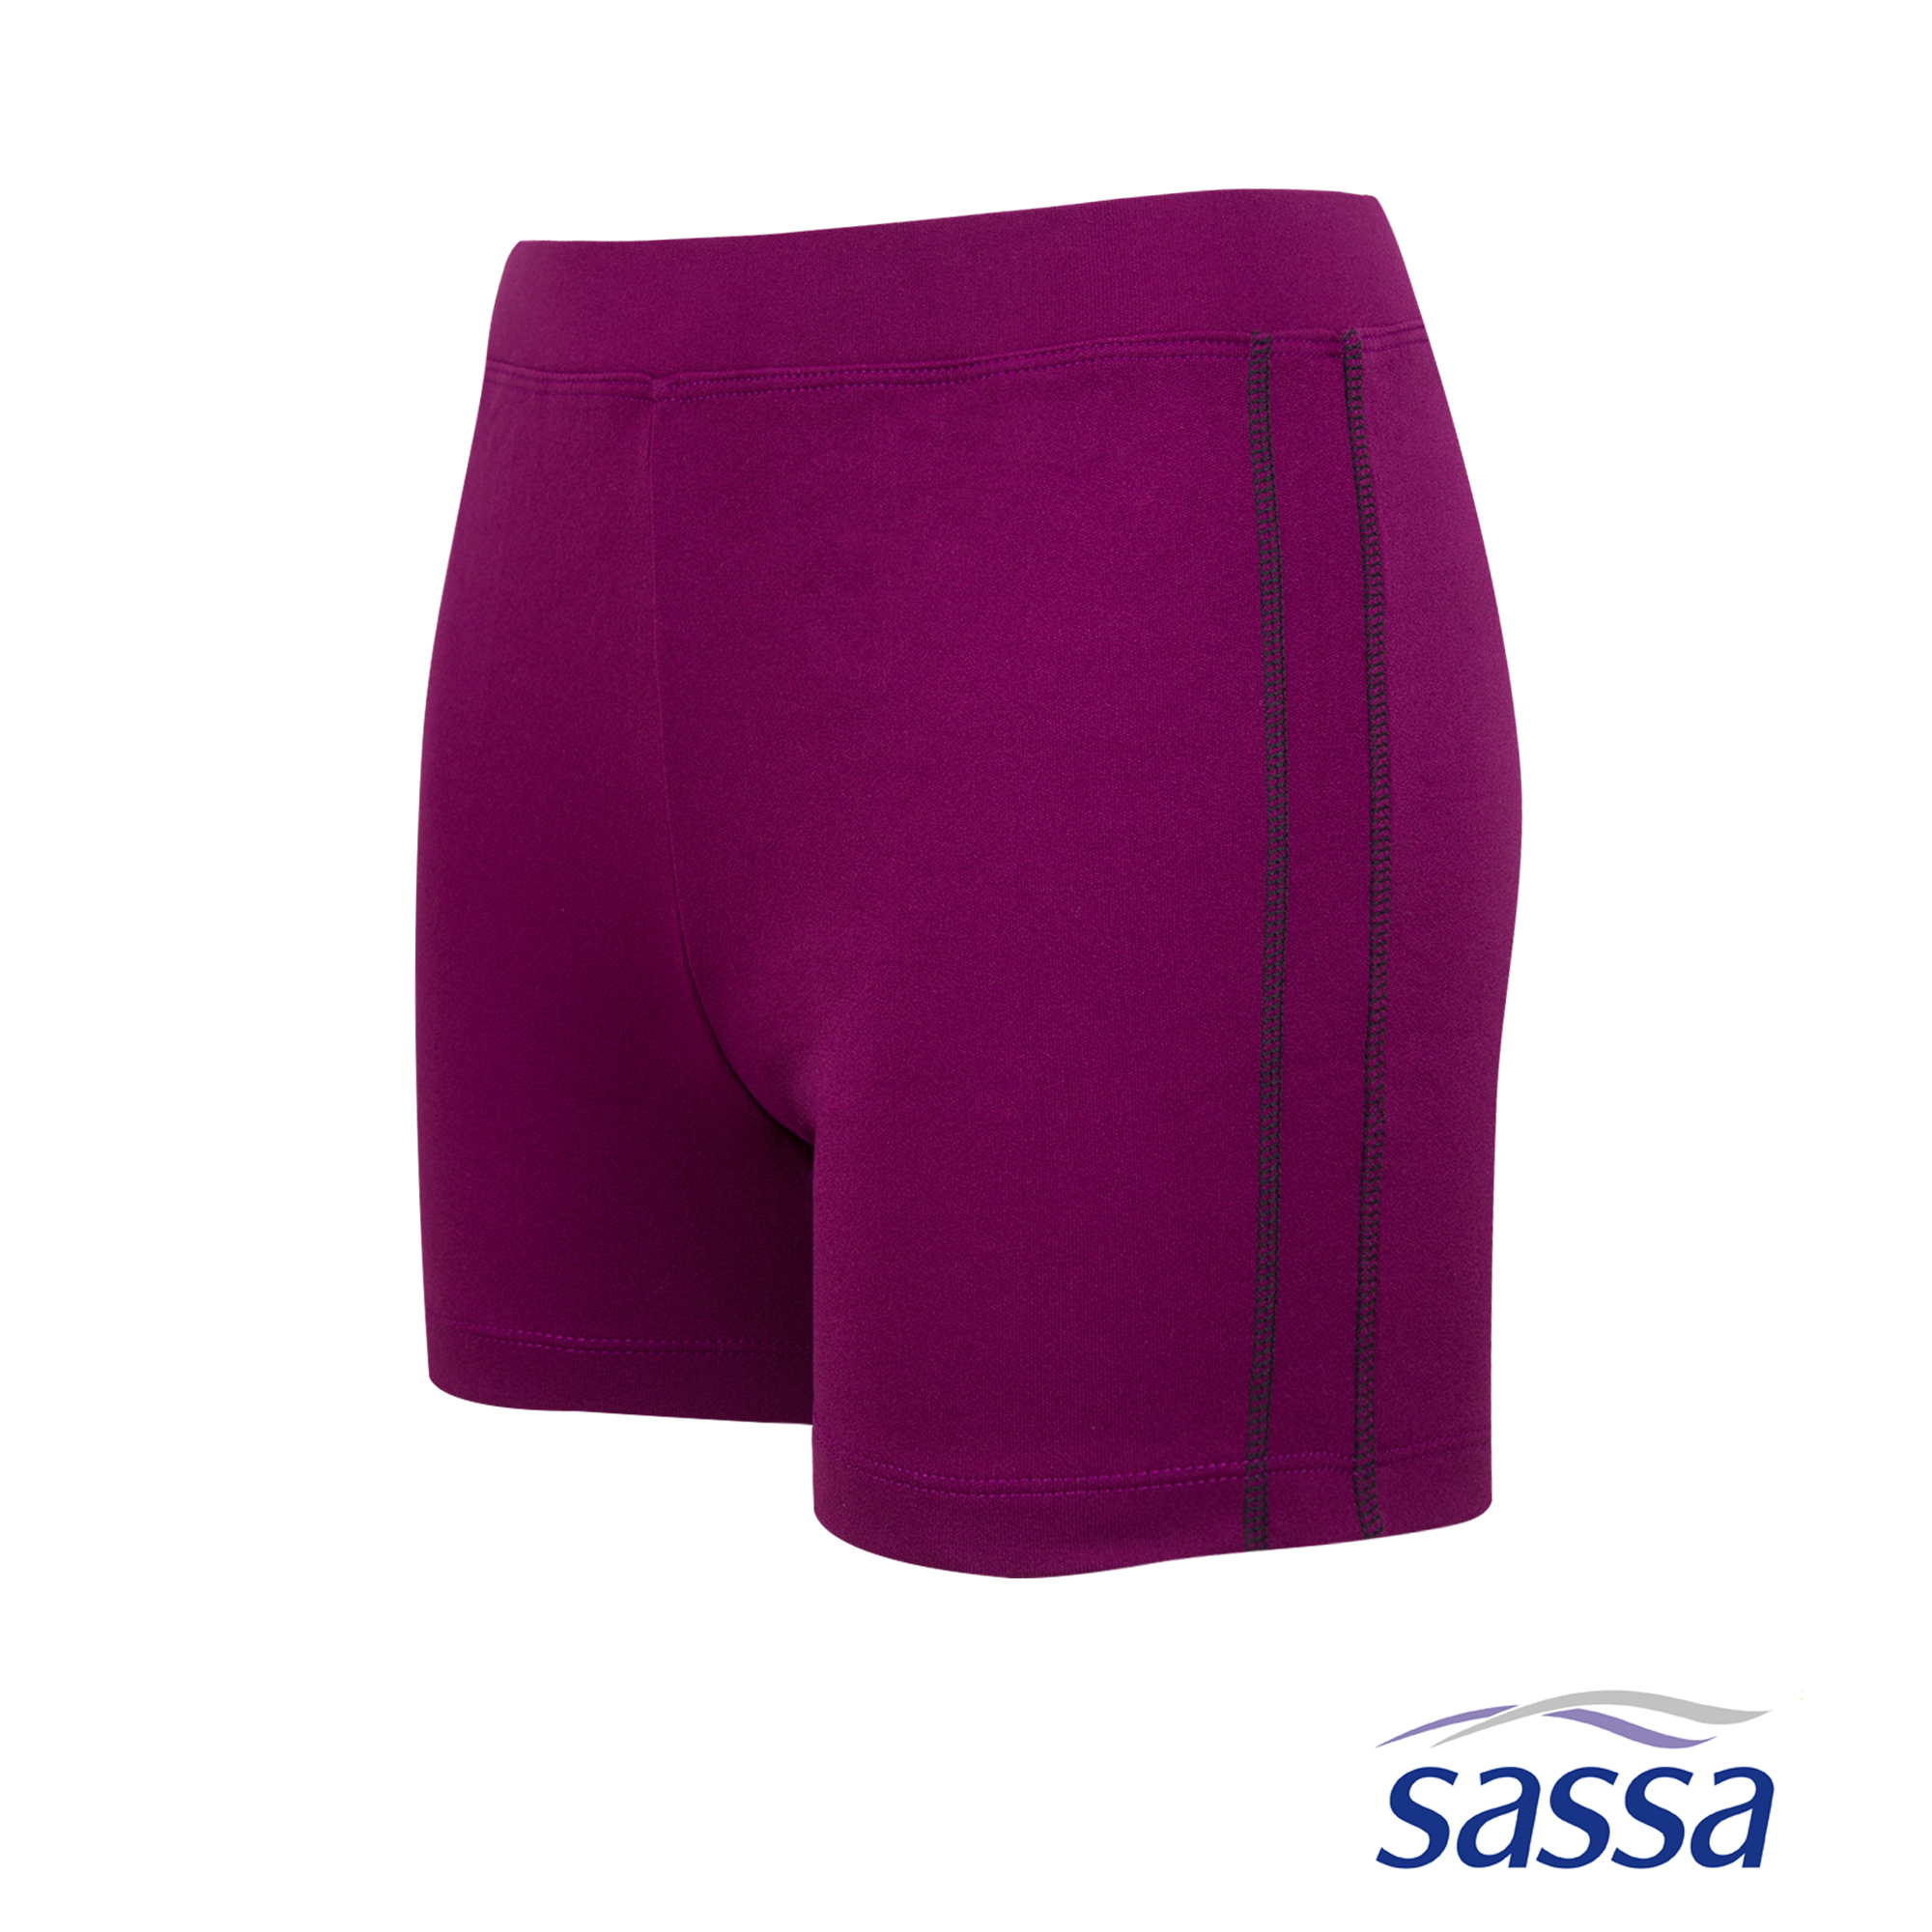 Sassa Womens Boy Shorts